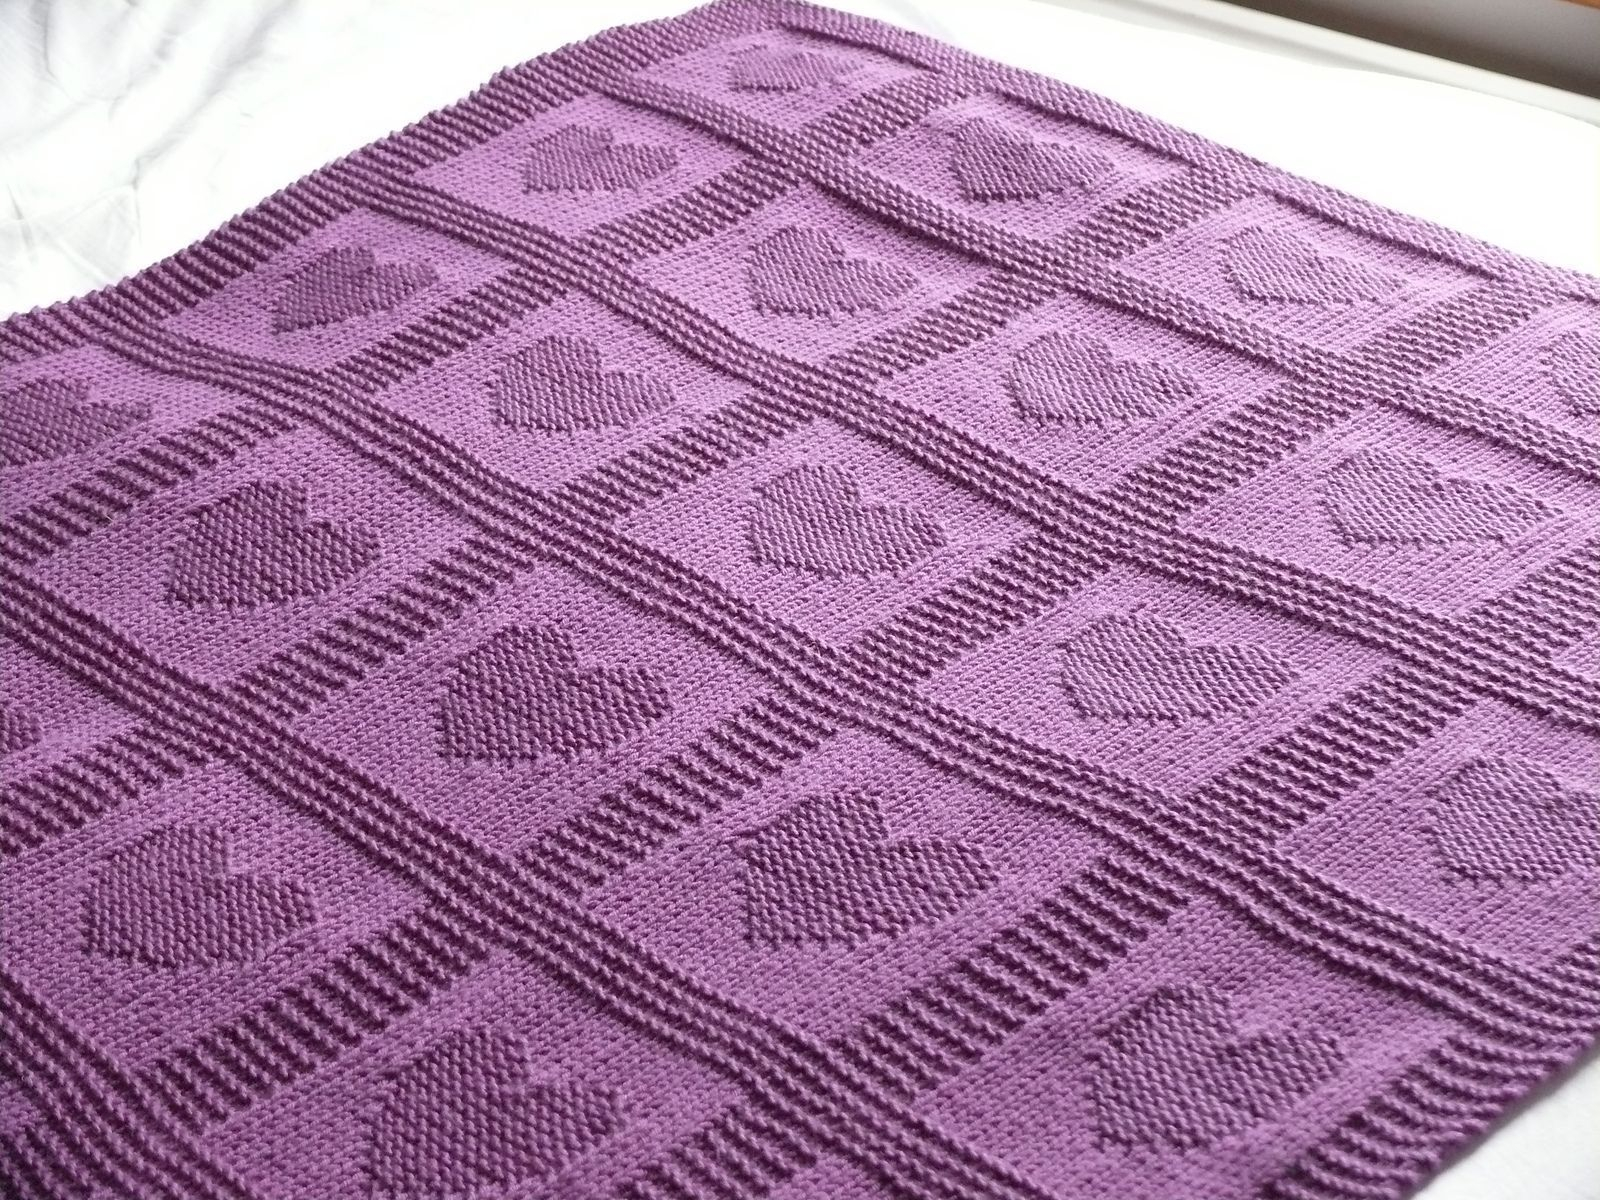 Free Knitting Patterns For Baby Blankets Heart Ba Blanket Ann Saglimbene Free Knitted Pattern Knitting